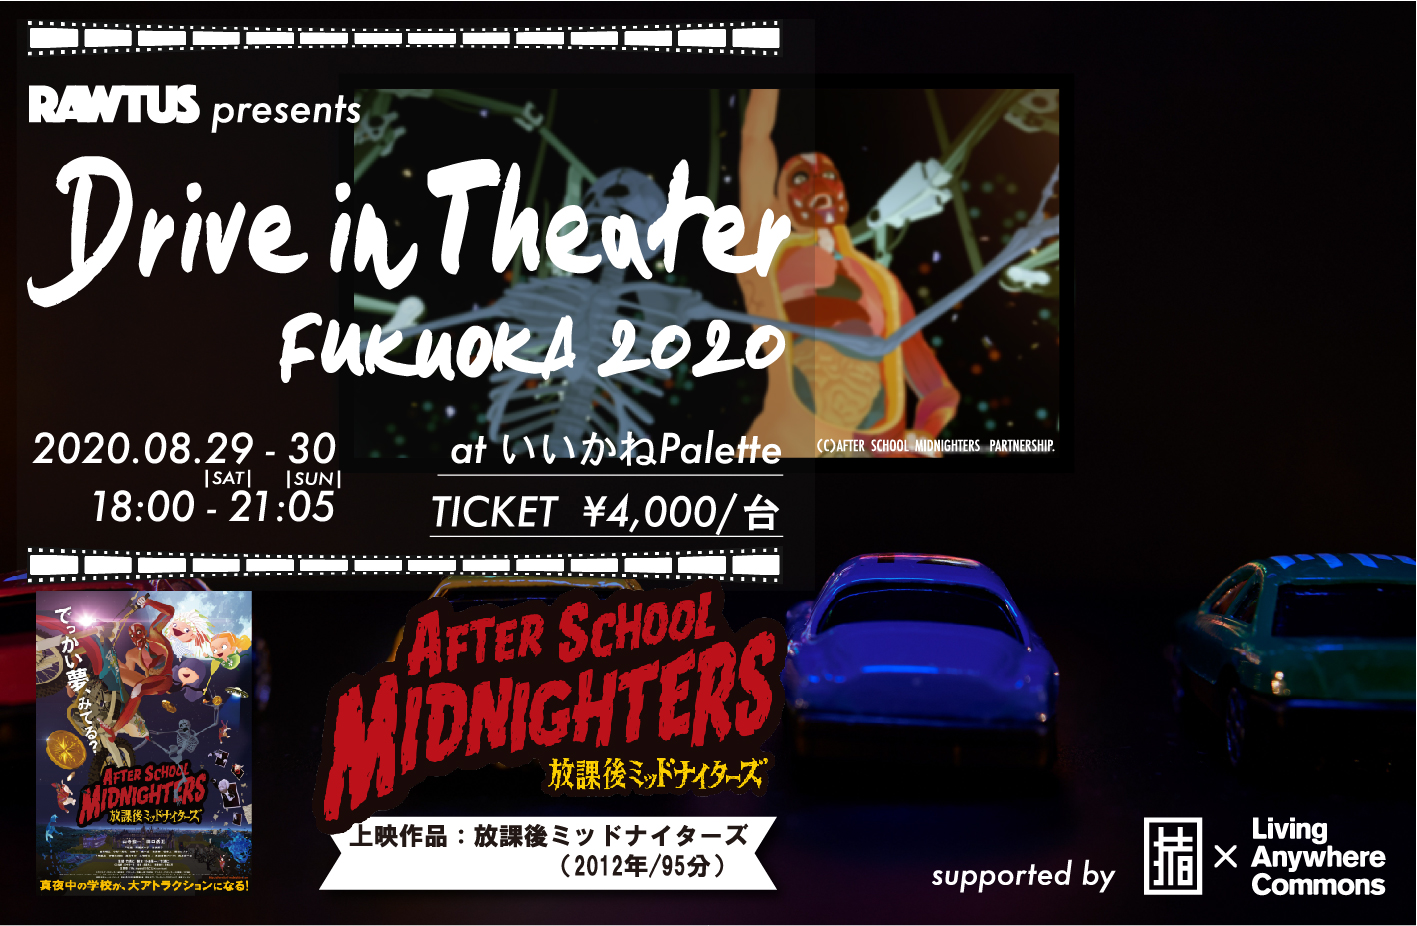 Drive in Theater Fukuoka 2020